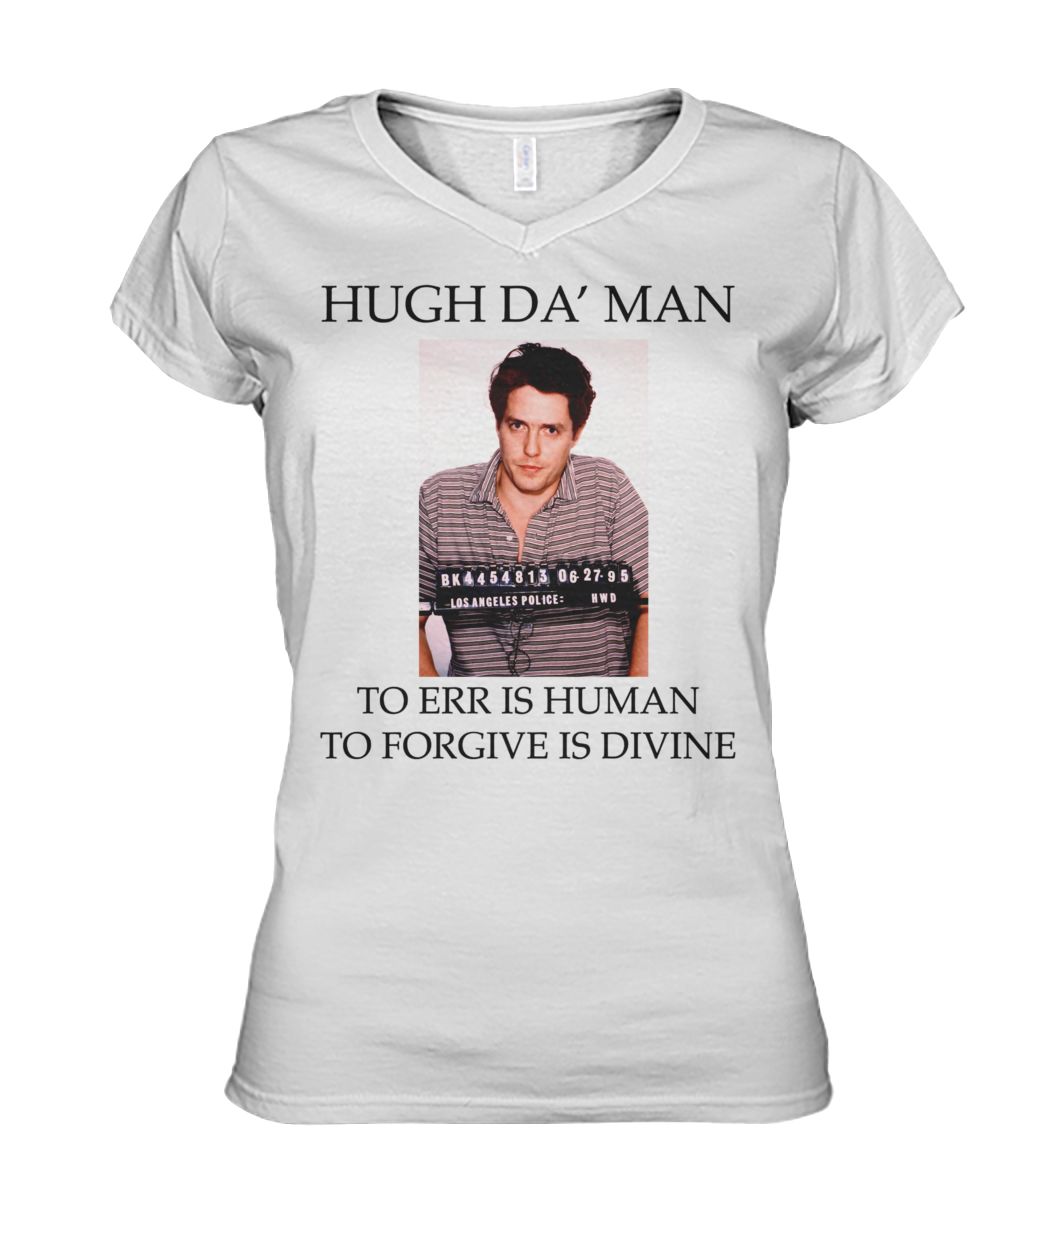 Hugh da' man to err is human to fogive is divine women's v-neck